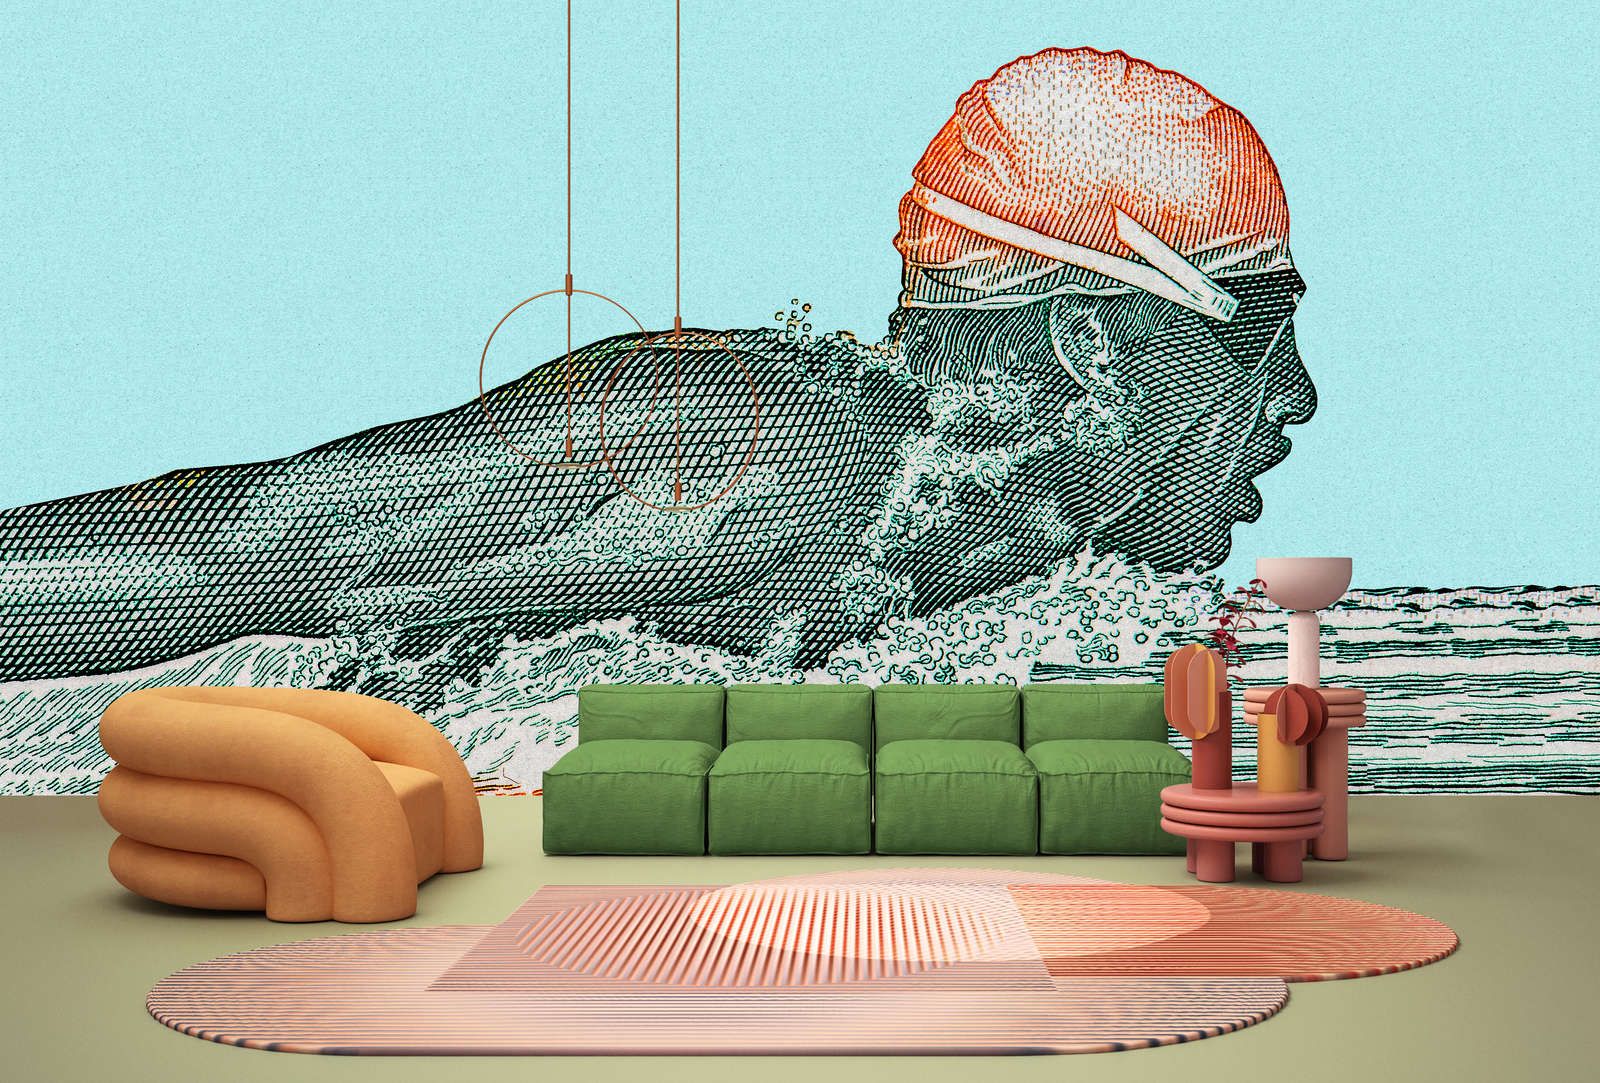             Fotomurali »aquaman« - nuotatore in pixel - benzina con texture carta kraft | tessuto non tessuto opaco e liscio
        